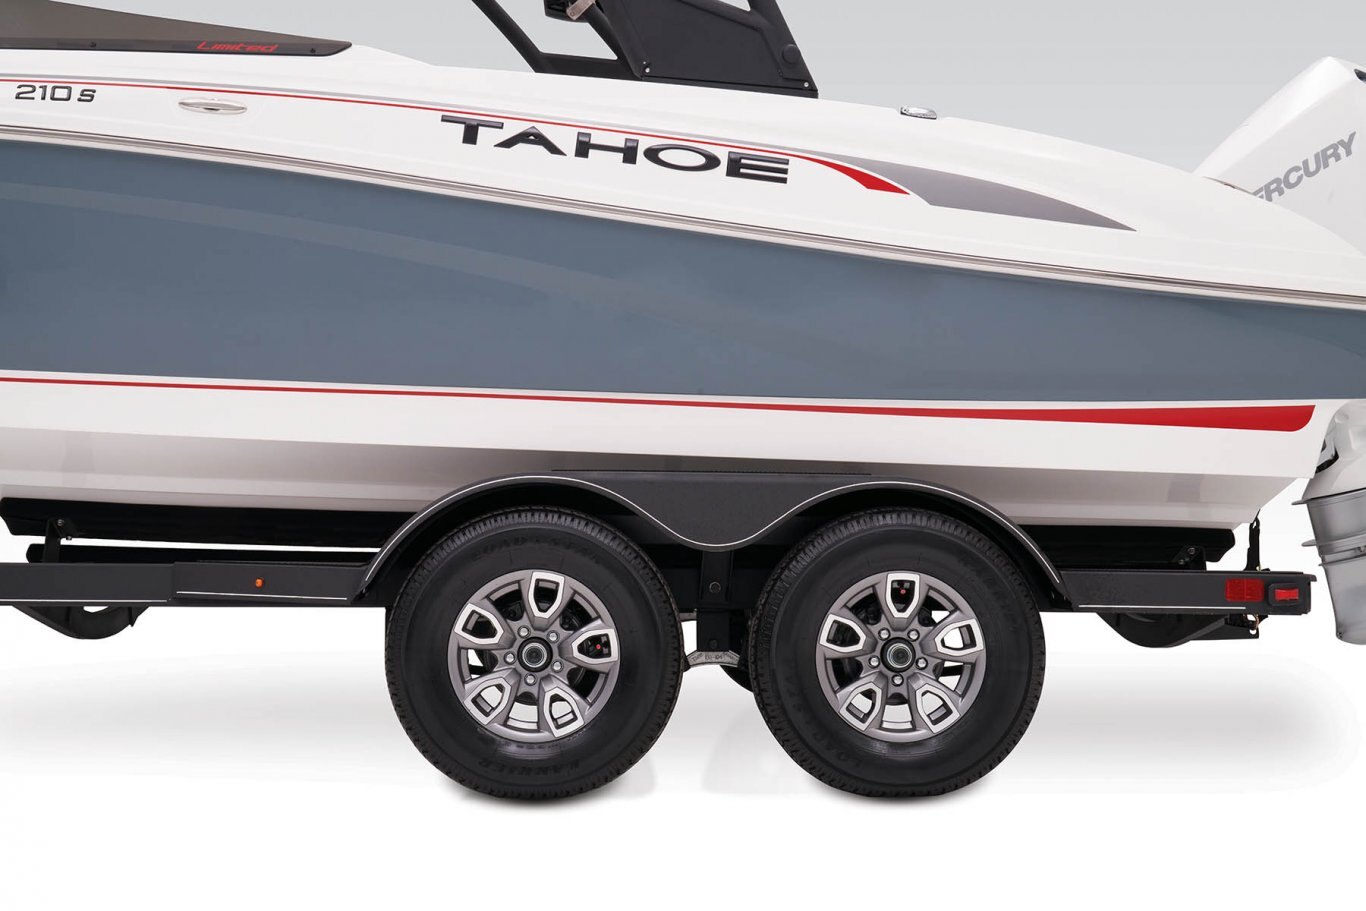 Tahoe 210 S Limited Black / Kiwi Accents